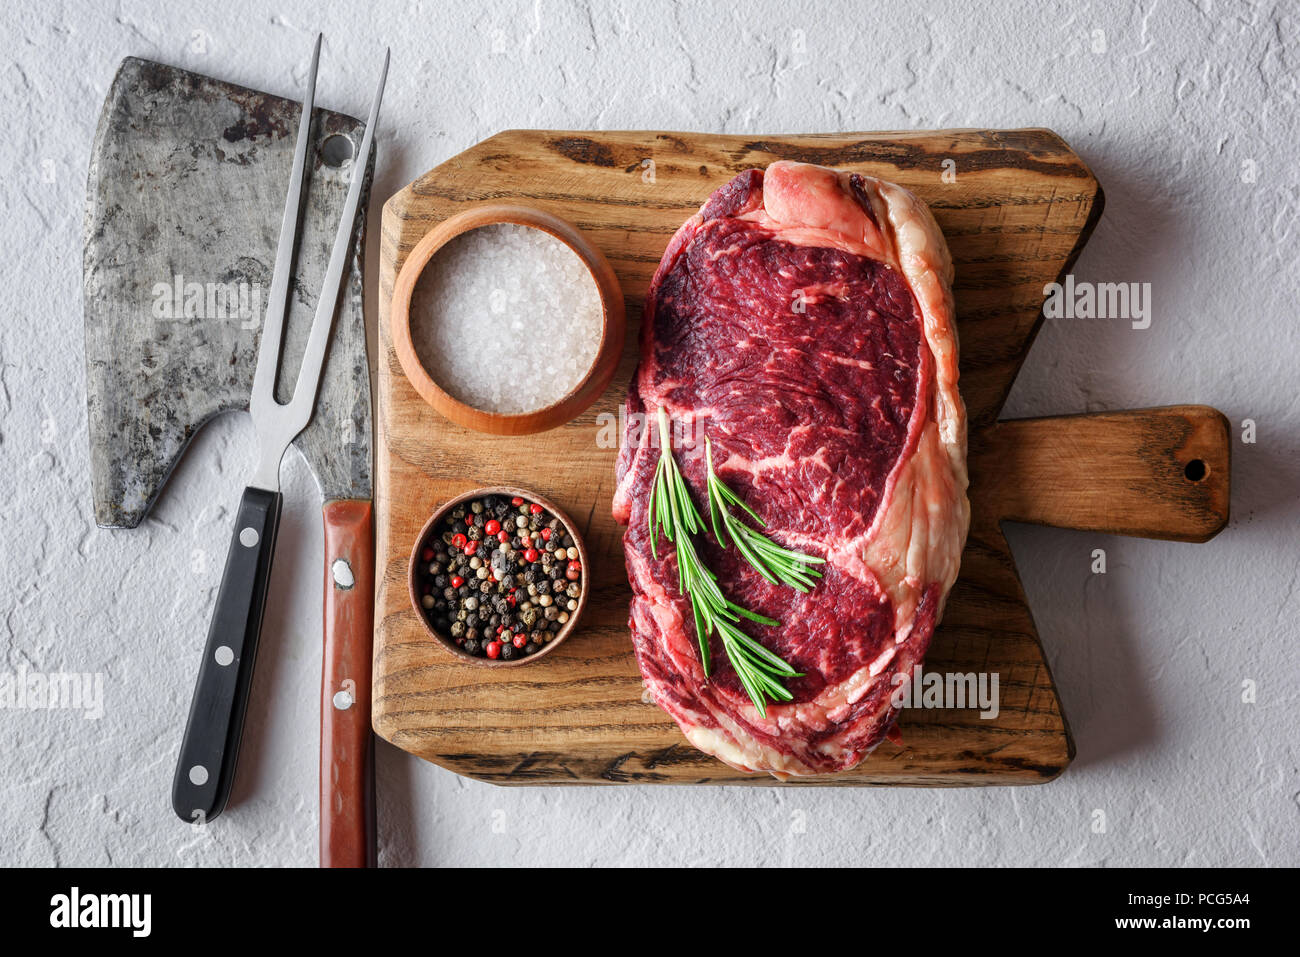 Marbling ribeye steak on wooden board Stock Photo